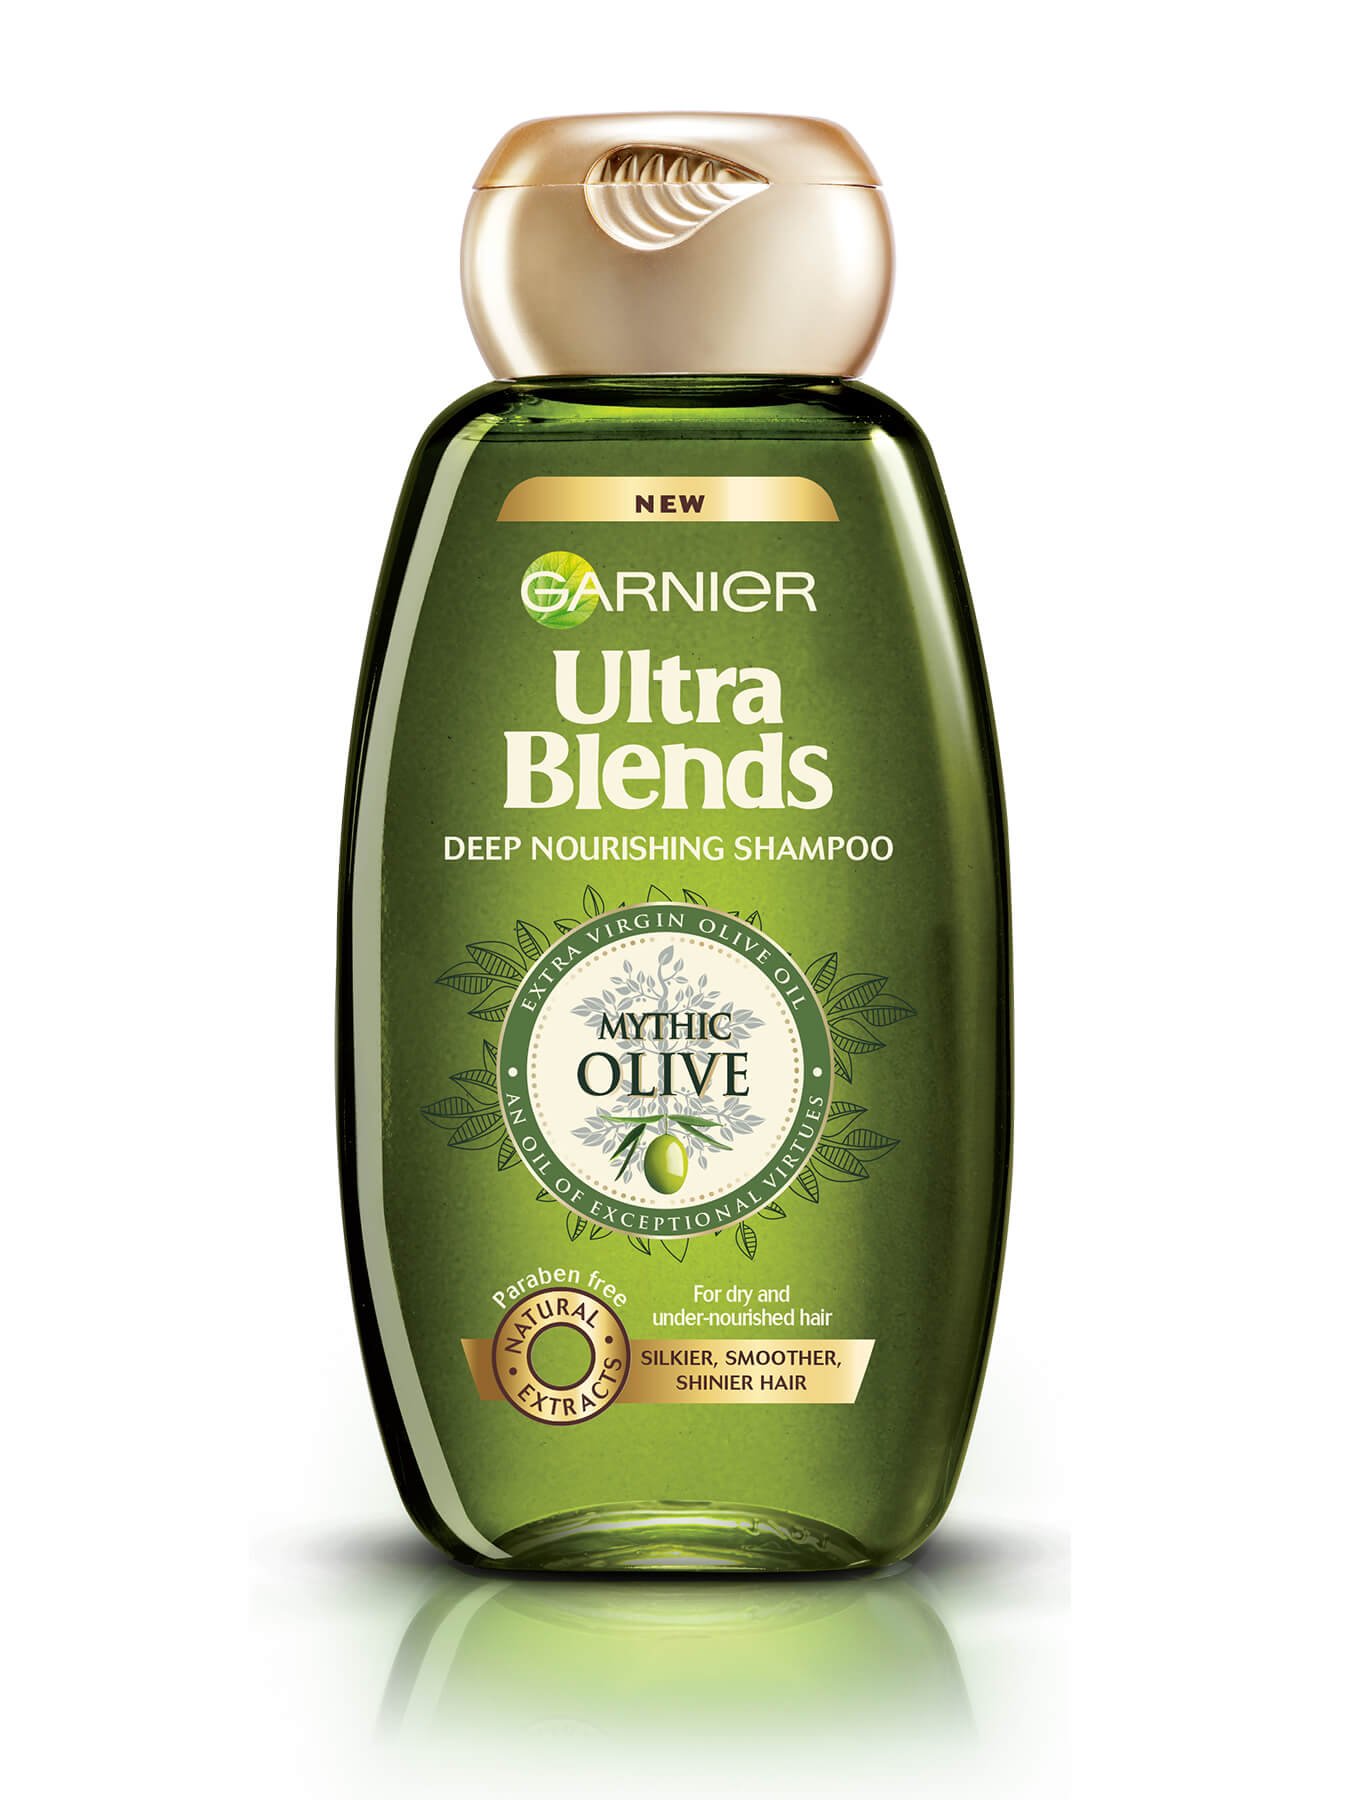 Garnier Ultra Blends Mythic Olive Shampoo 190 ml